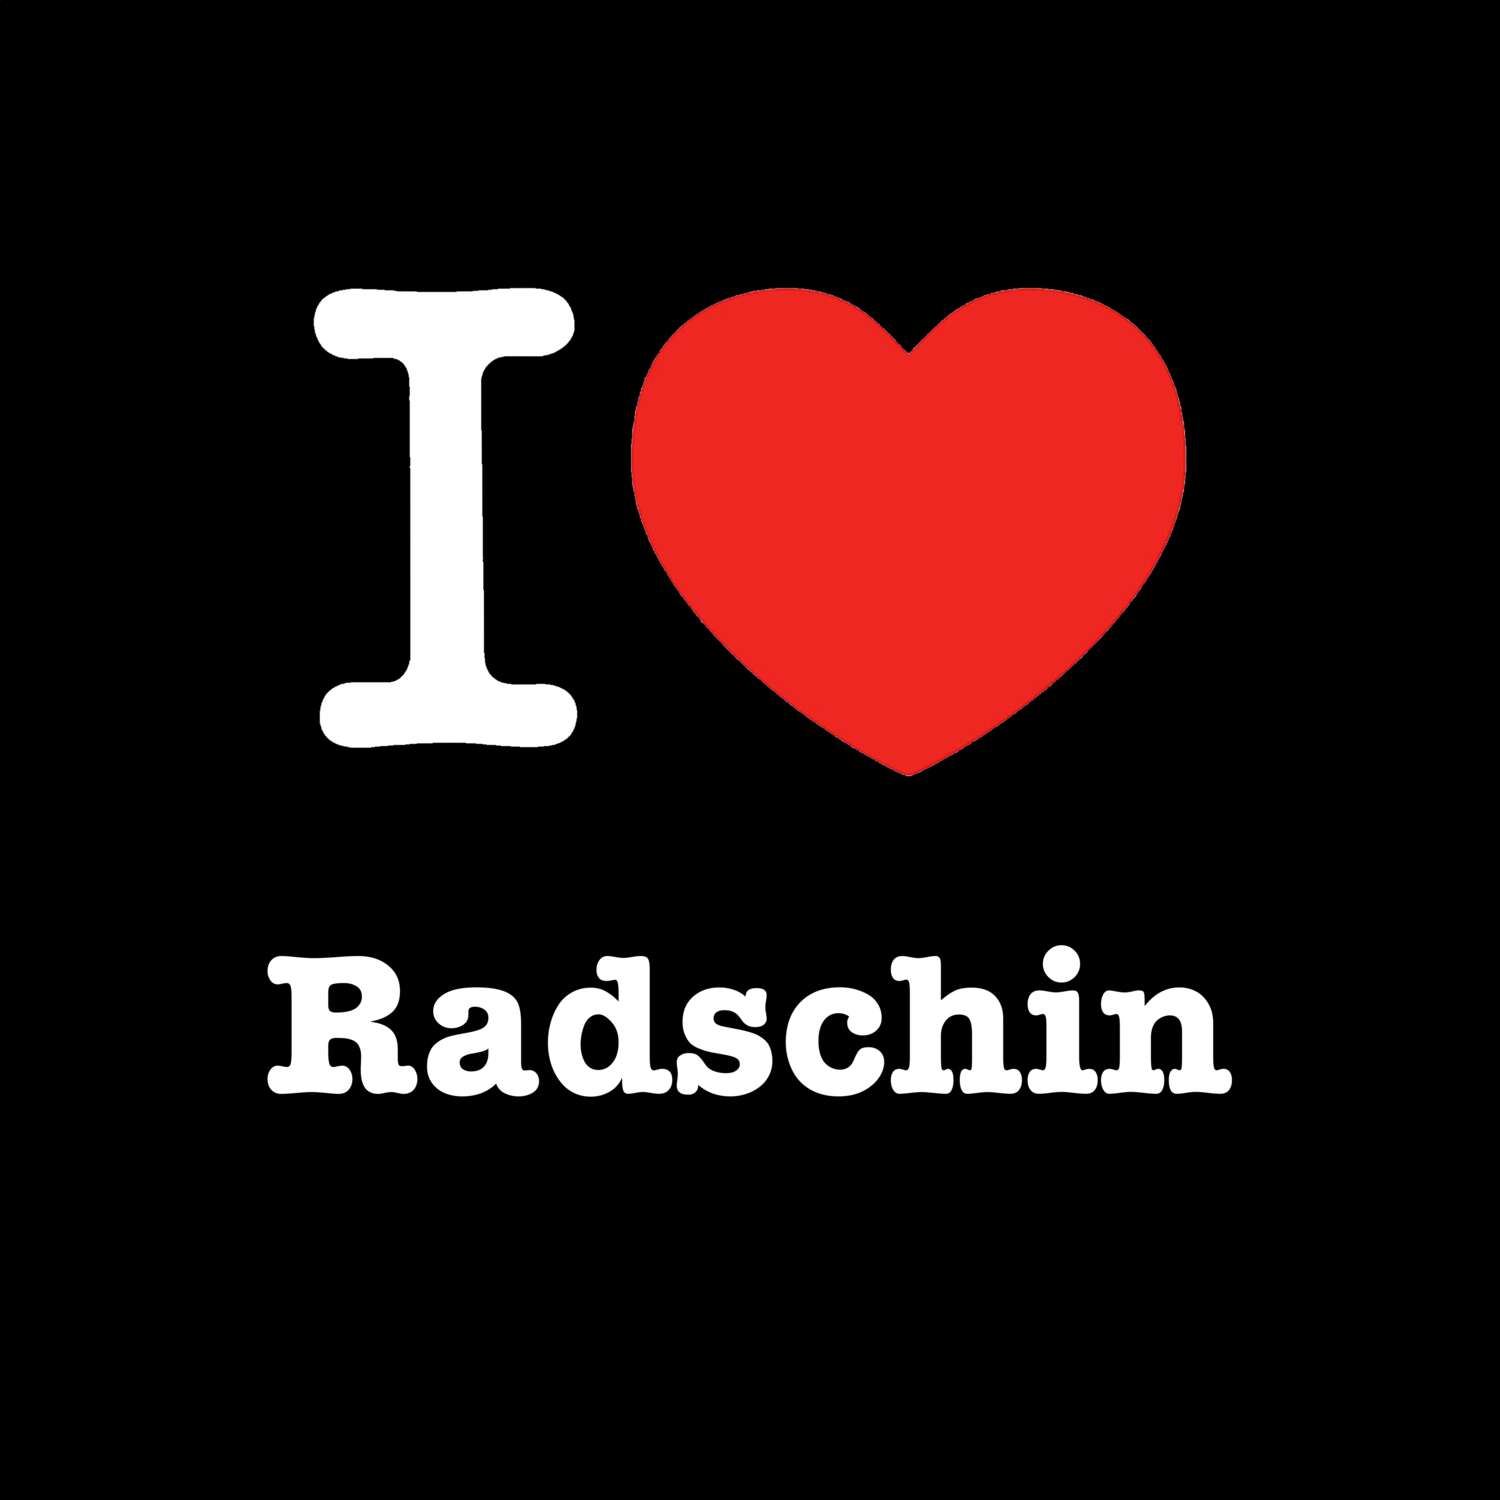 Radschin T-Shirt »I love«